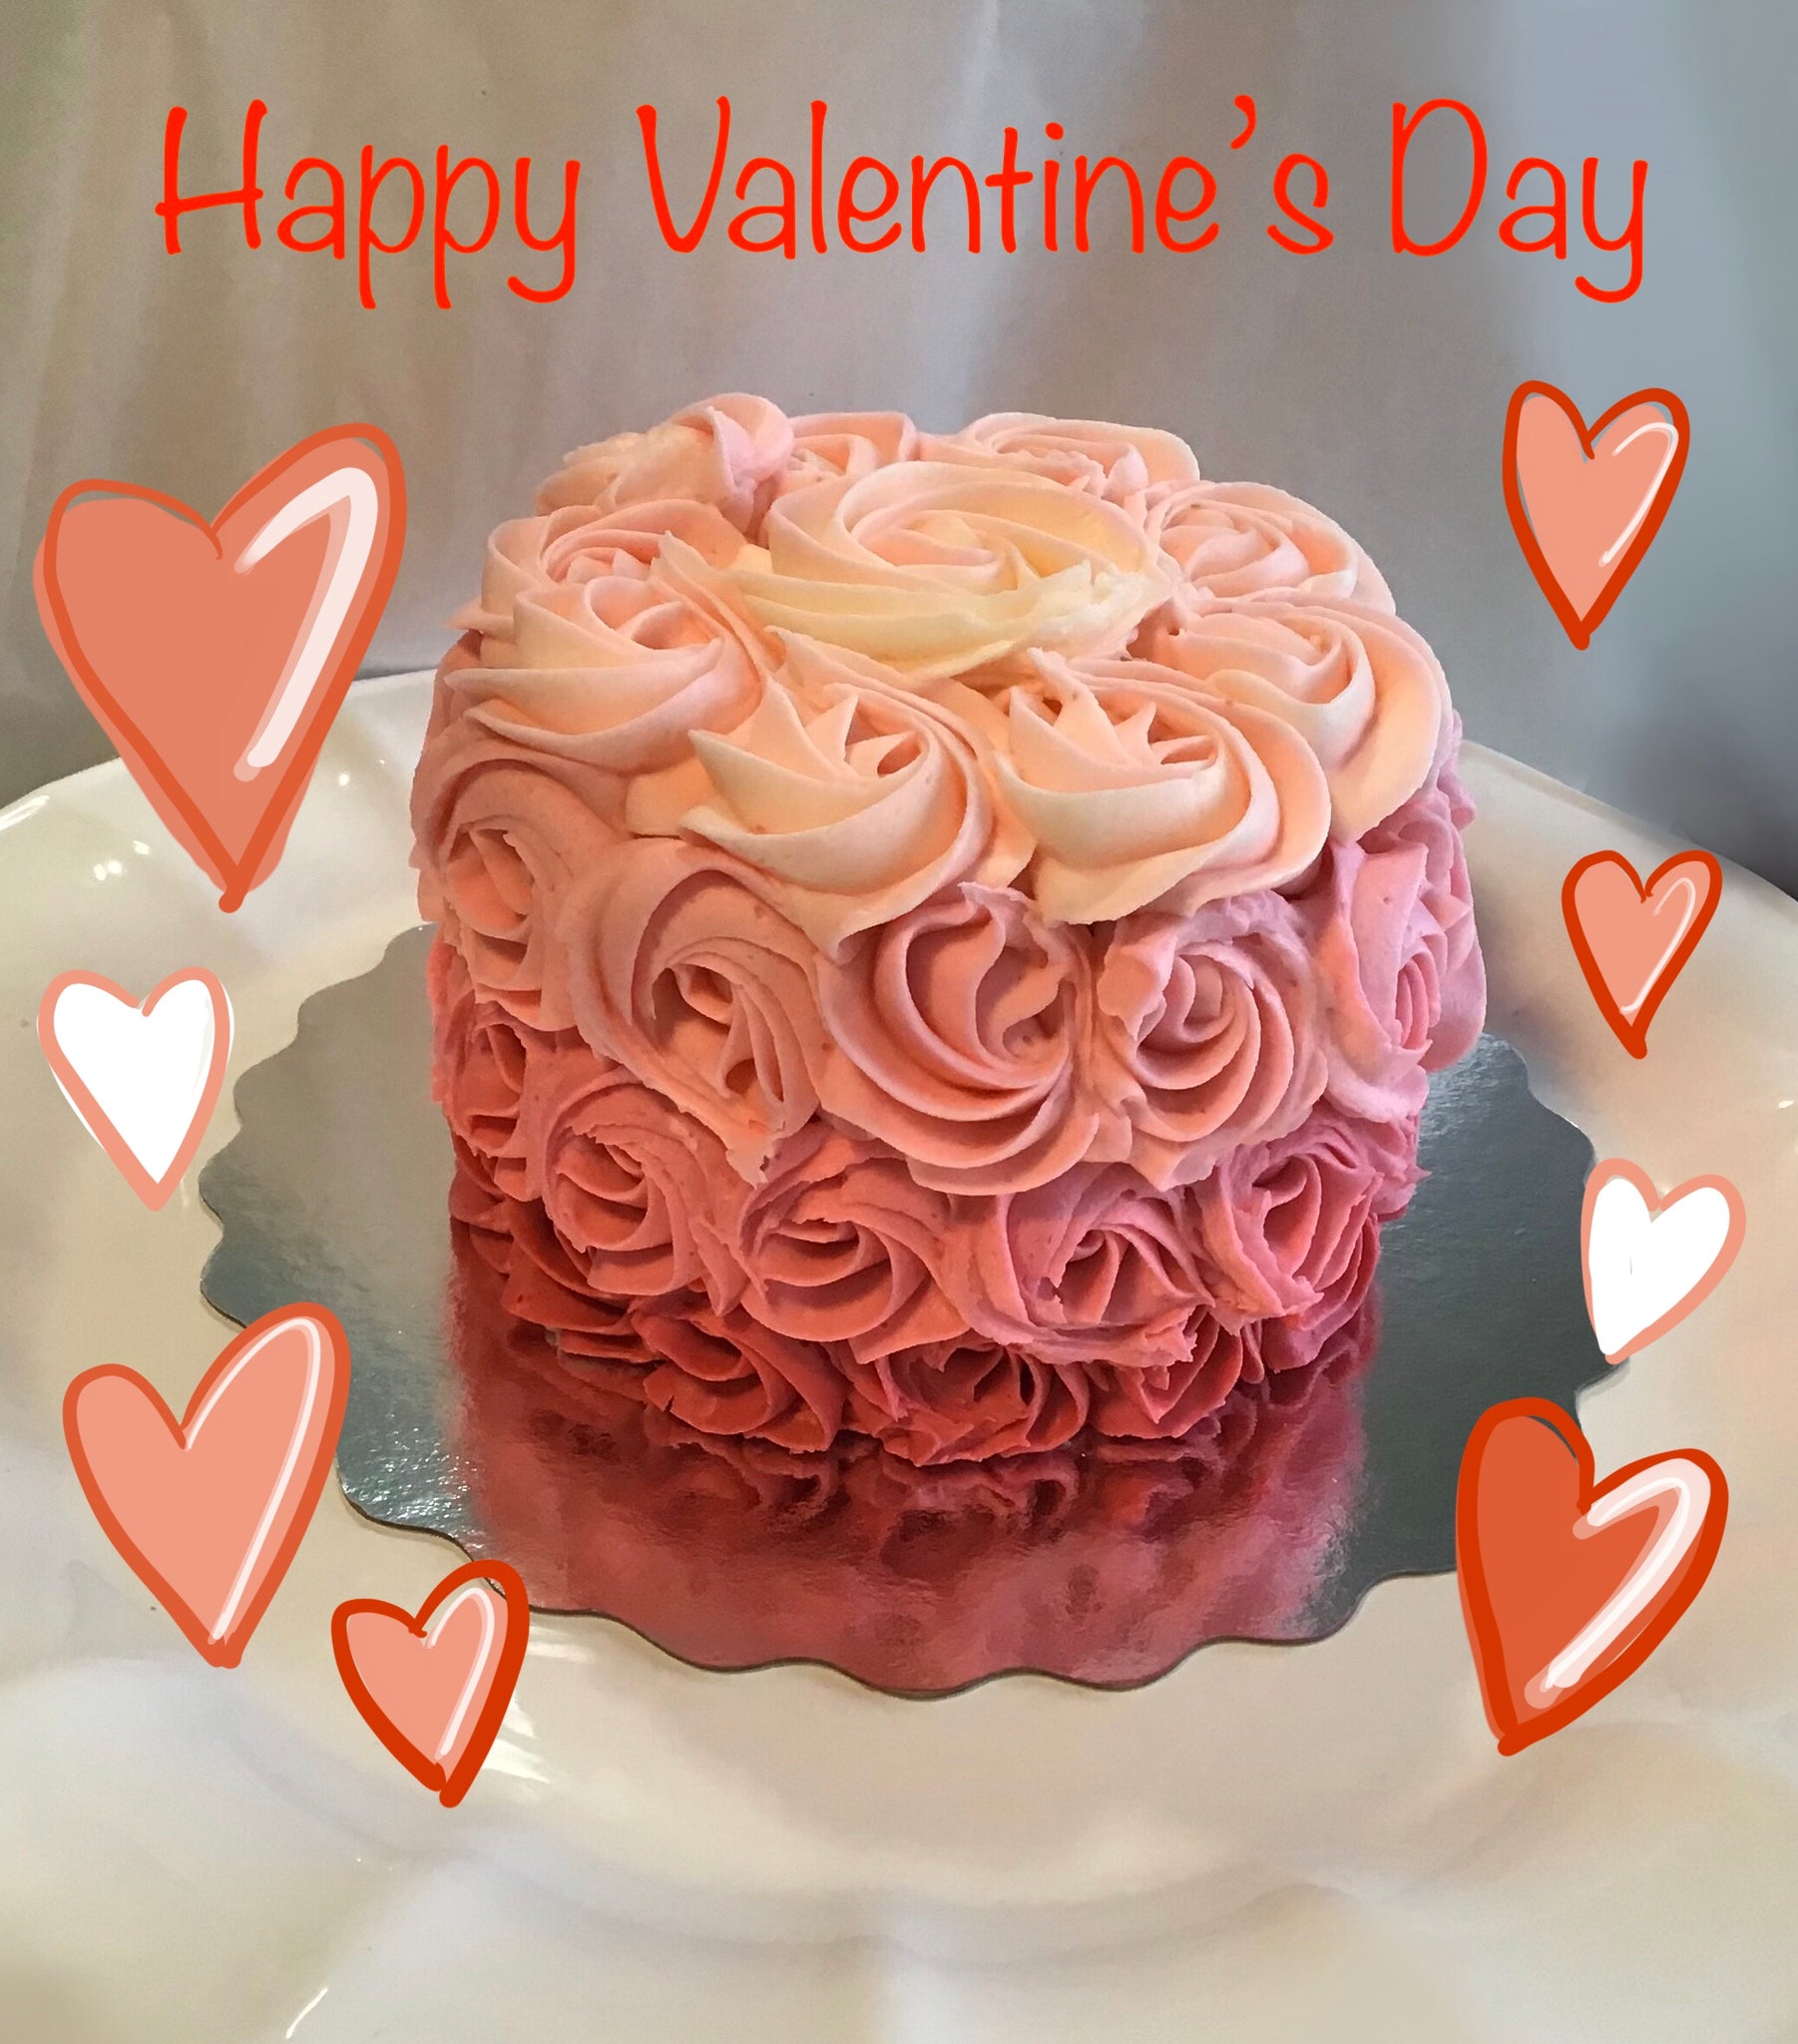 Valentines day cake Vectors & Illustrations for Free Download | Freepik